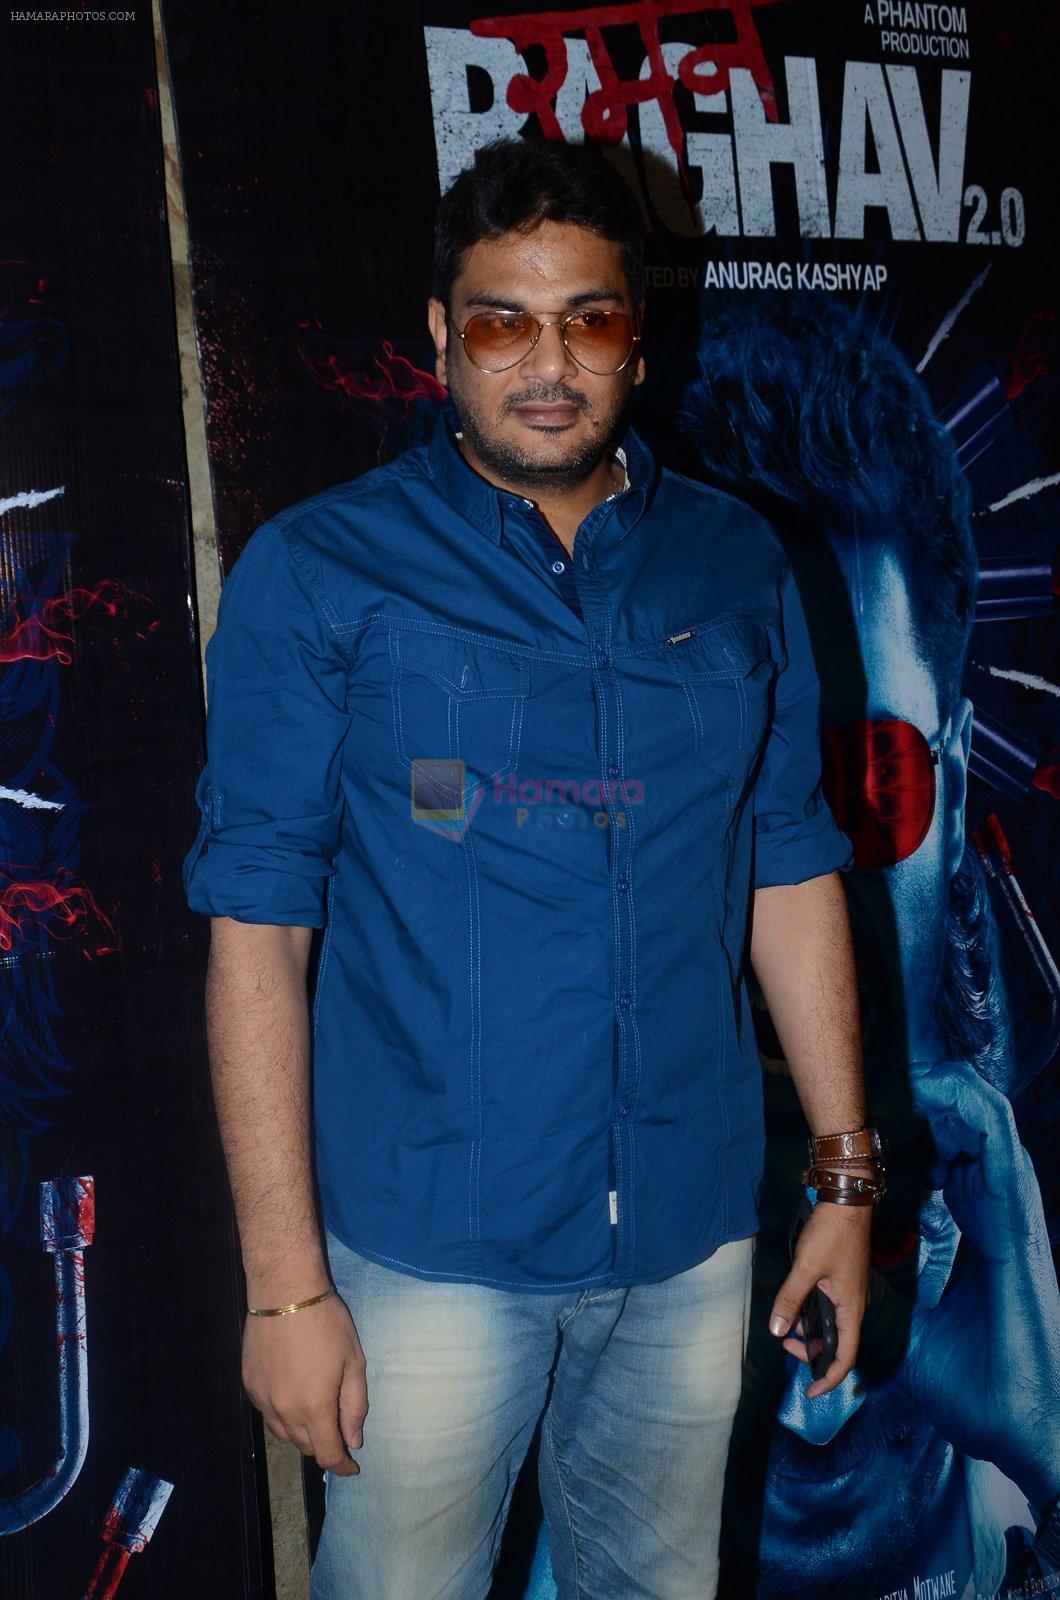 during the special screening of film Raman Raghav 2.0 in Mumbai, India on June 22, 2015